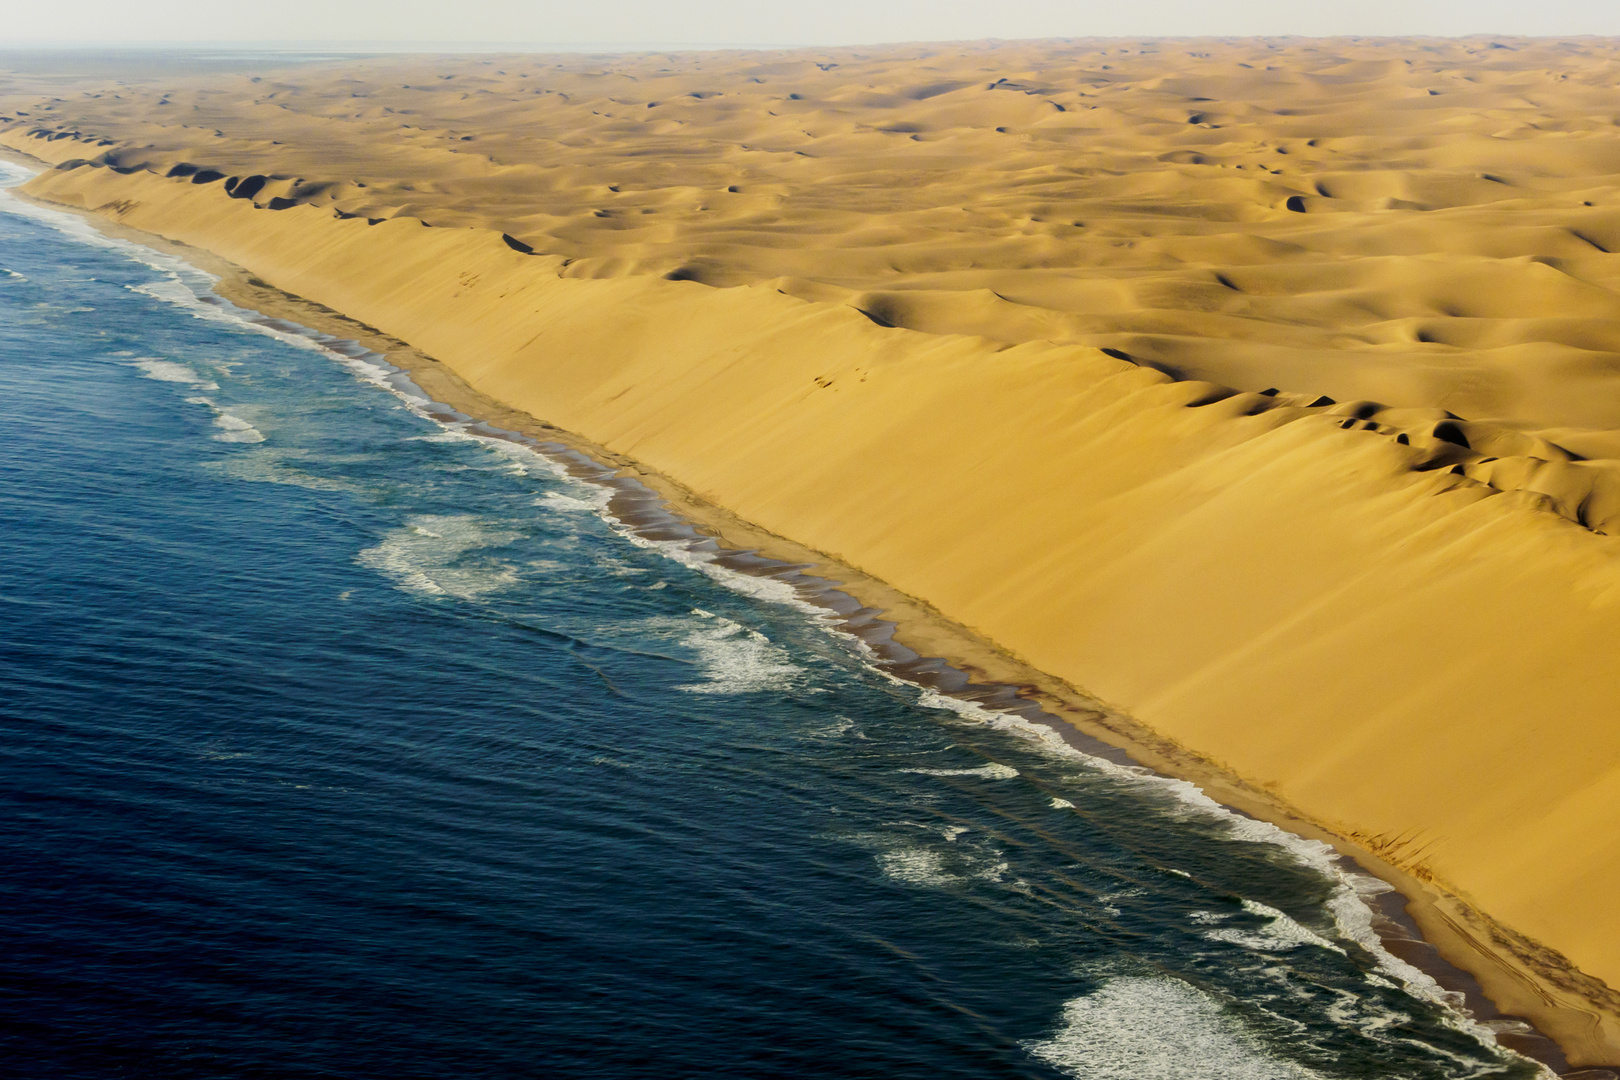 where the desert meets the ocean